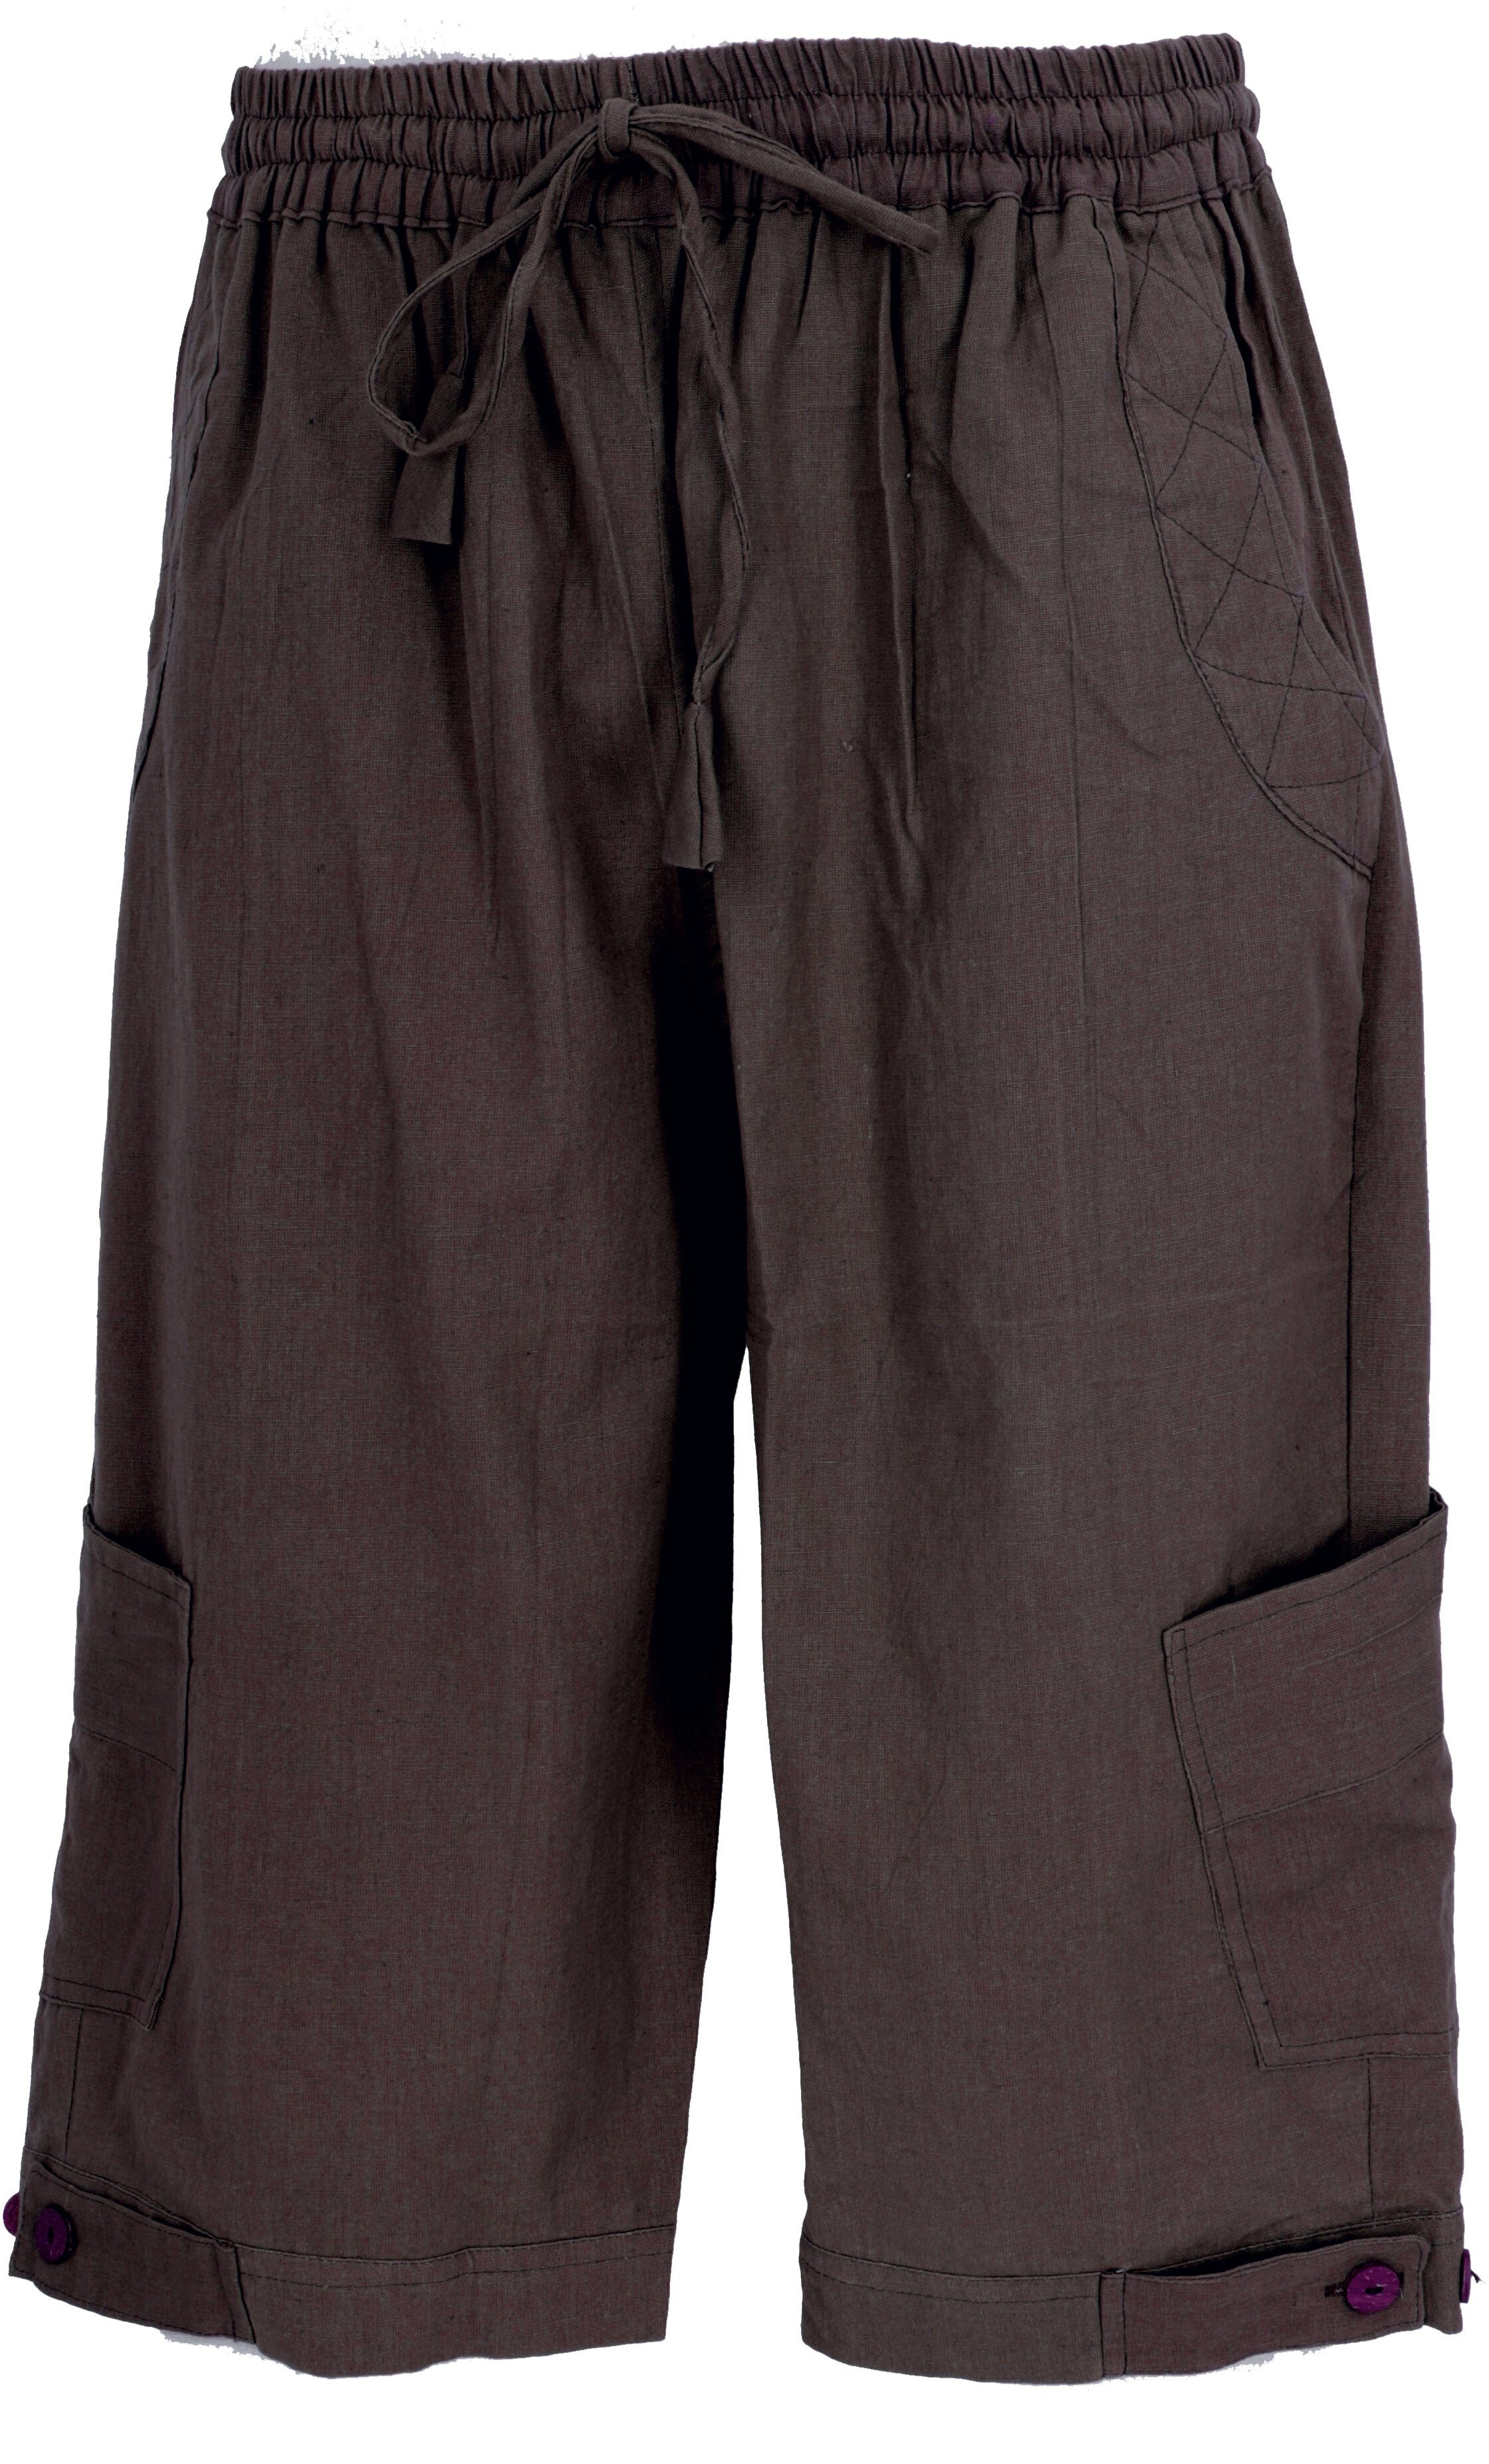 Style, alternative Relaxhose Guru-Shop - Ethno Hose, Goa Bekleidung Yogahose, 3/4 Goa braun Shorts